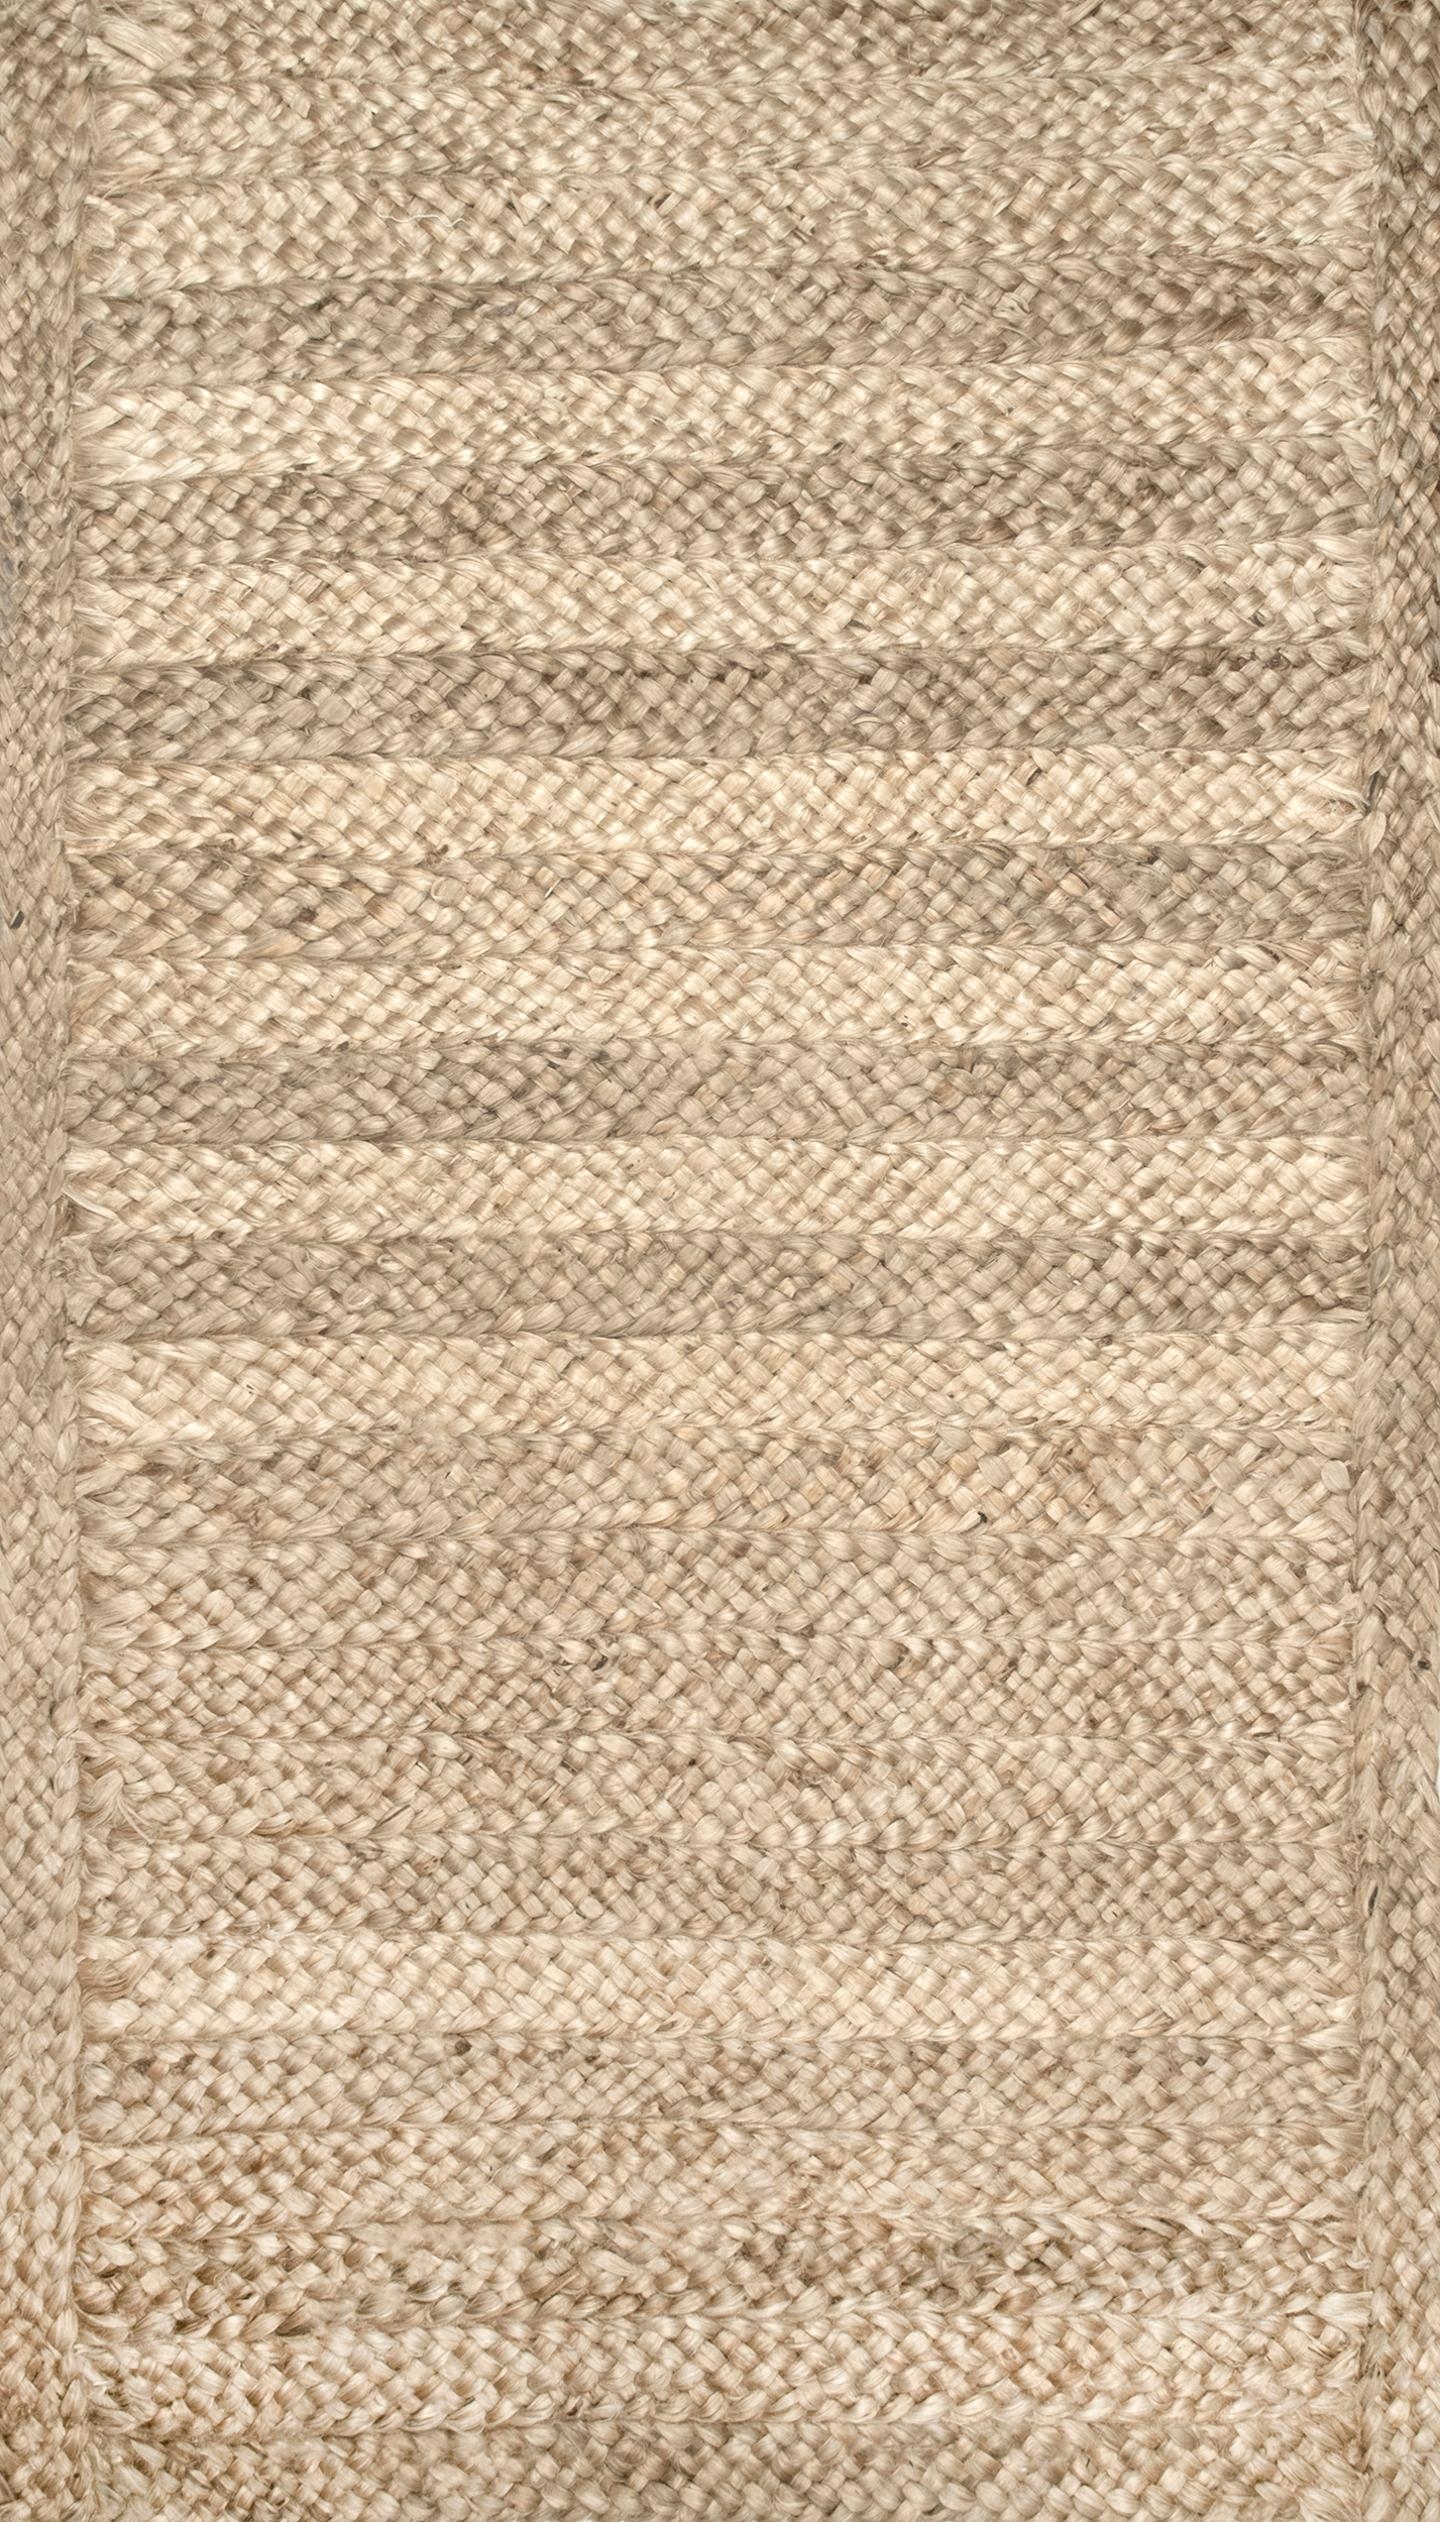  Keilani Striped Braided Jute Area Rug - Image 1